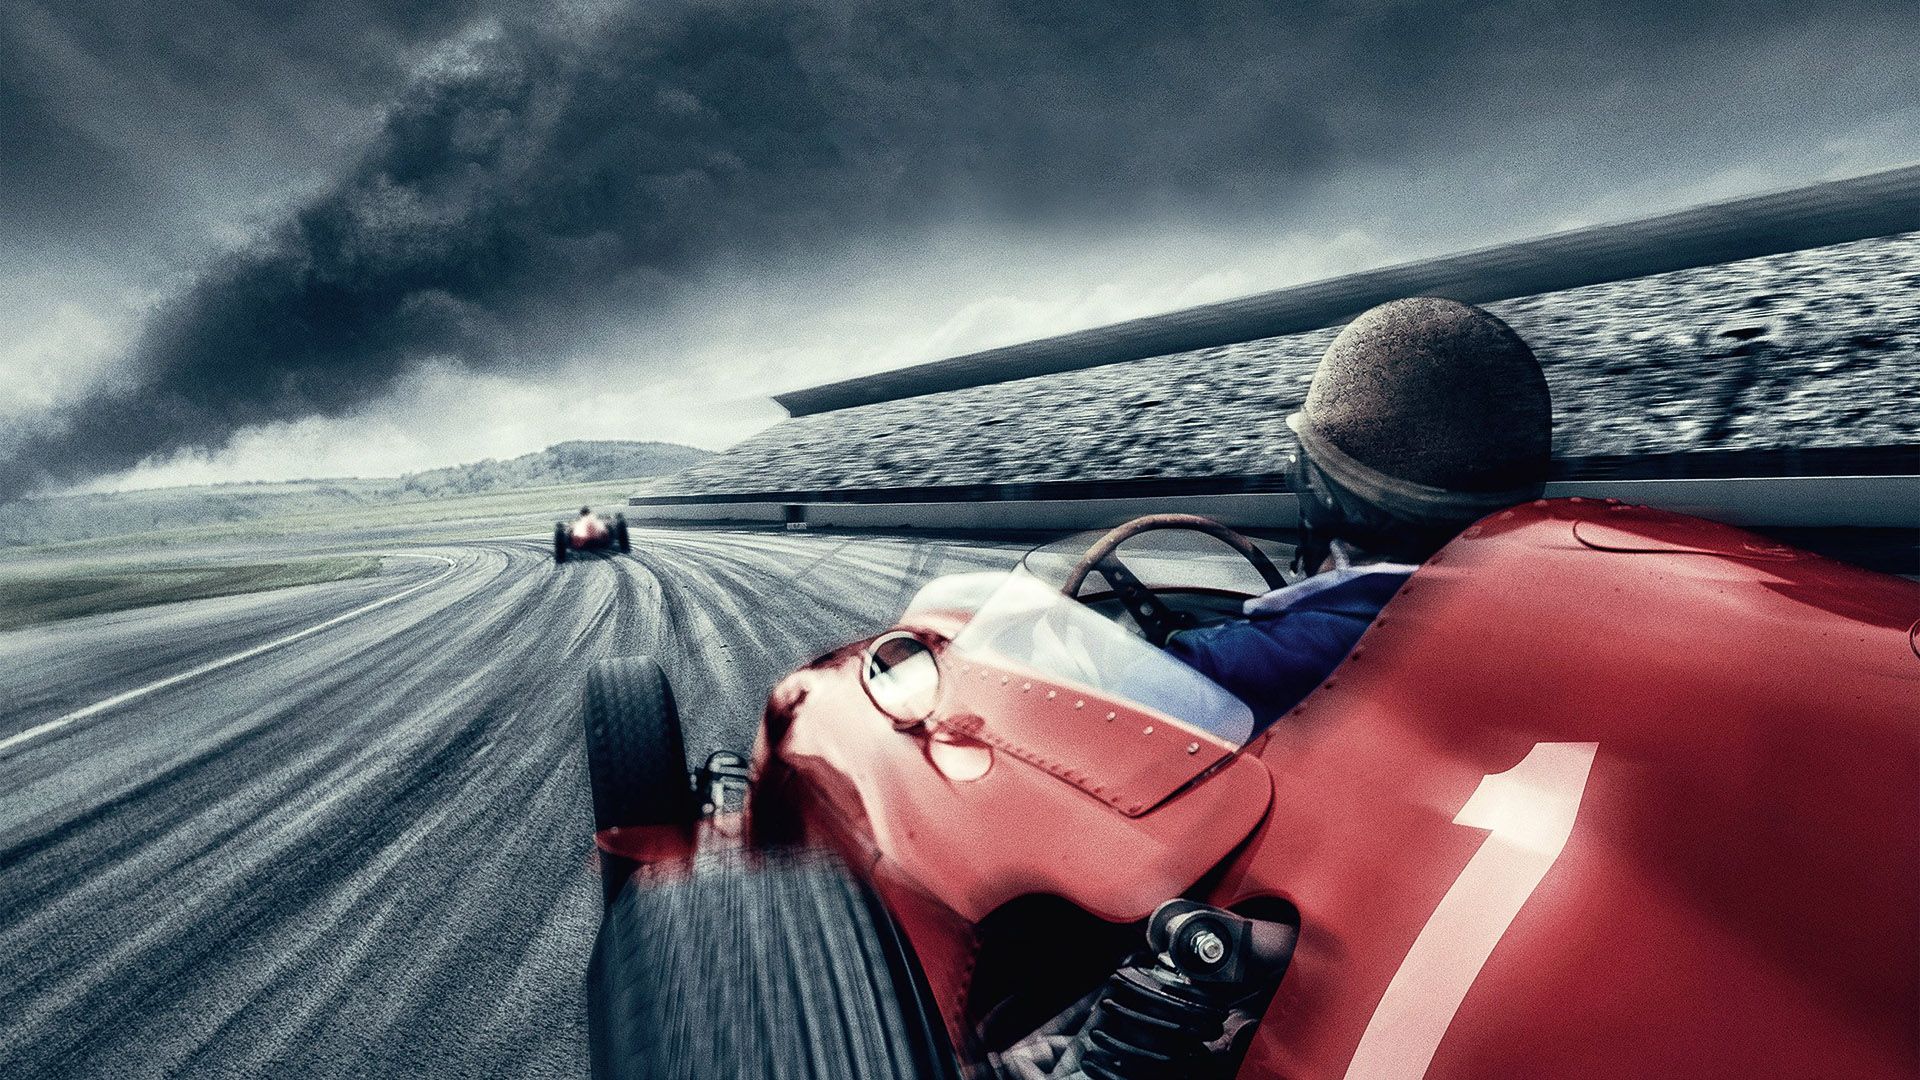 Ferrari: Race to Immortality background